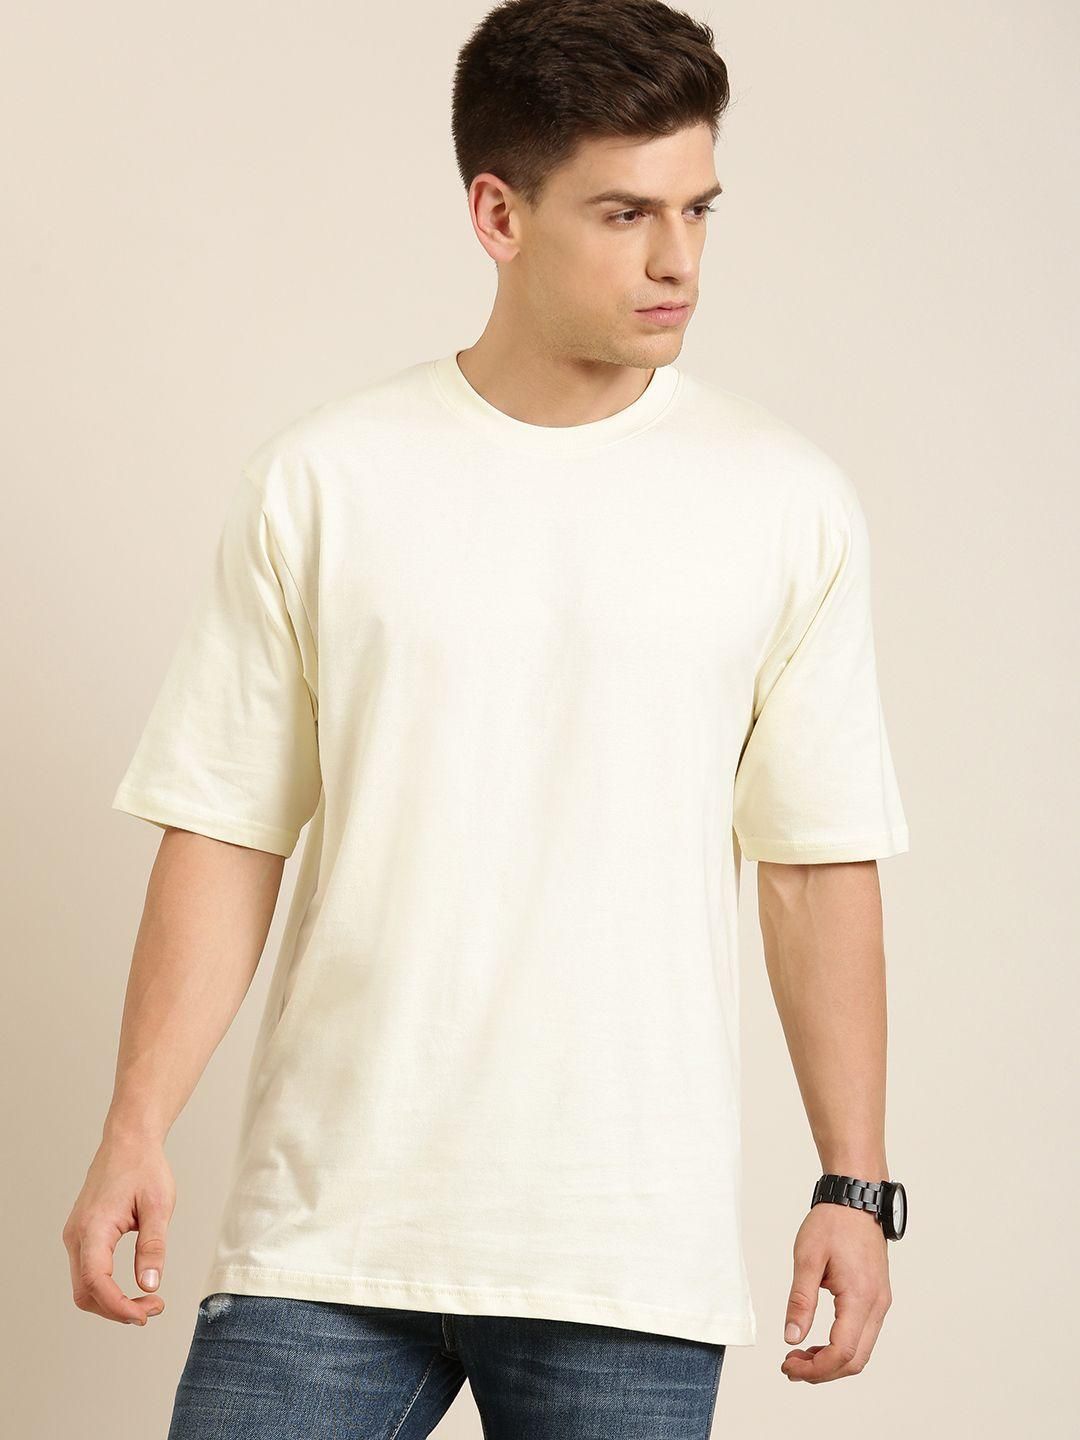 Dillinger Cream Solid Oversized T-Shirt